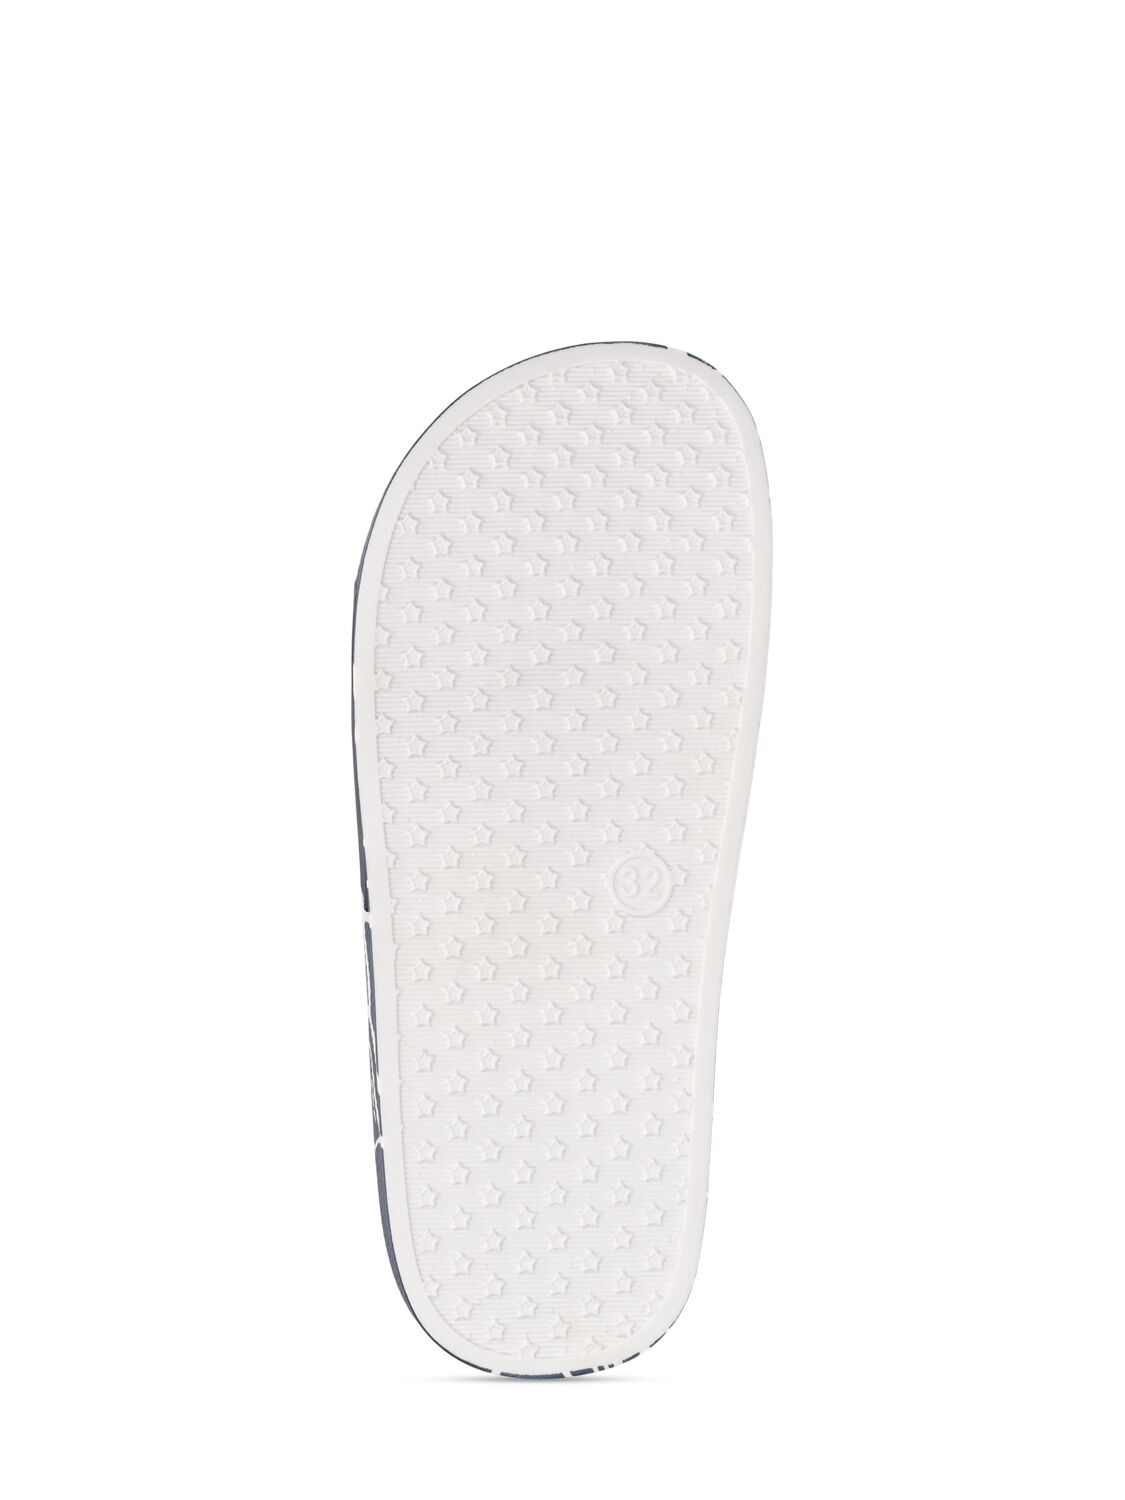 Shop Kenzo Logo Rubber Slide Sandals In Navy